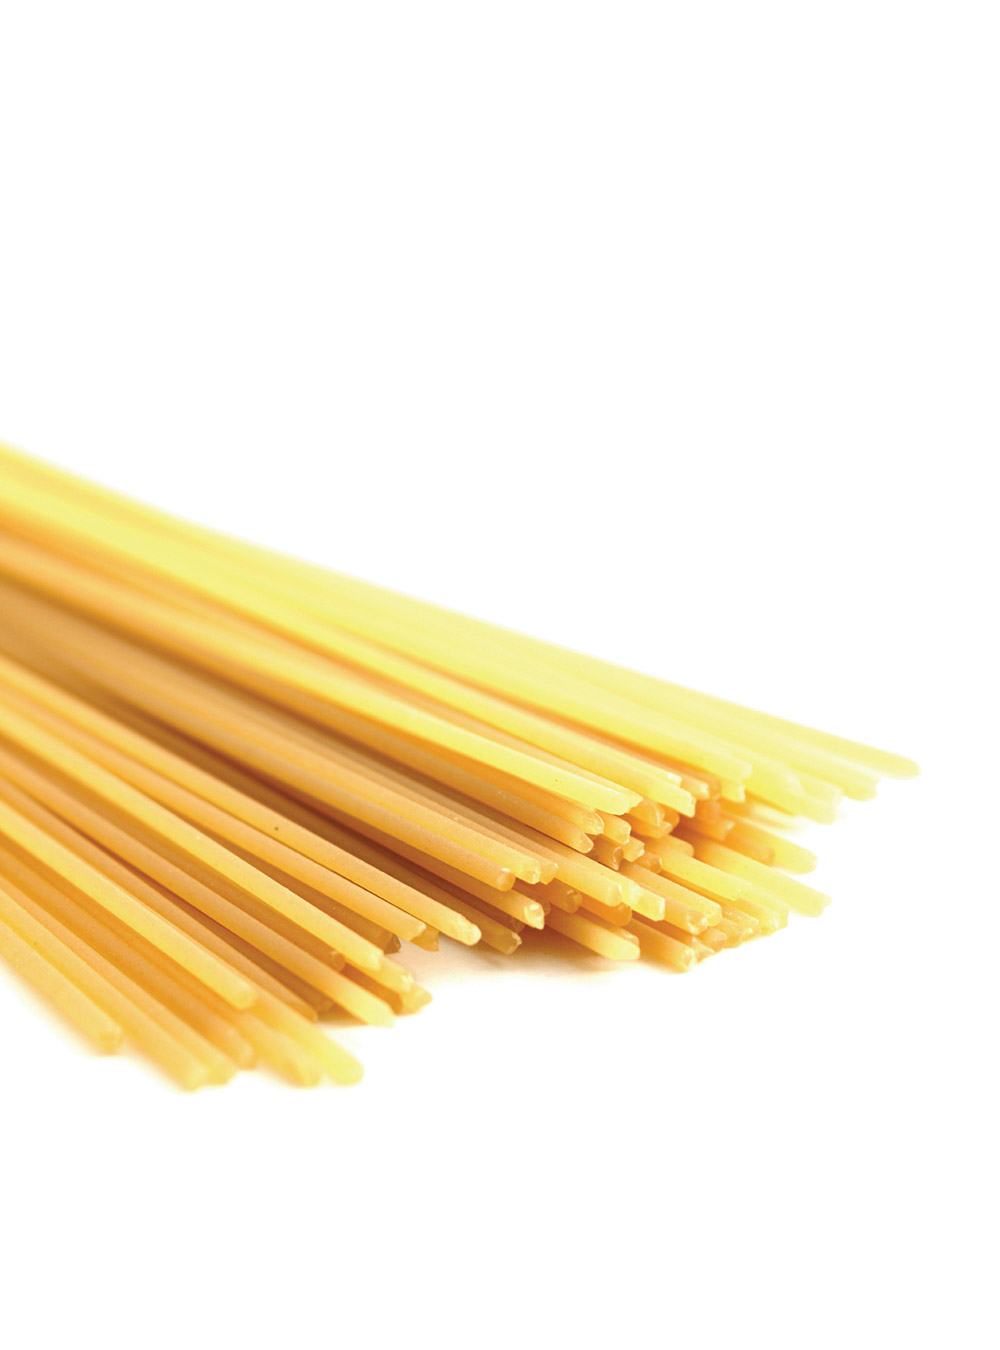 Spaghettini carbonara version santé